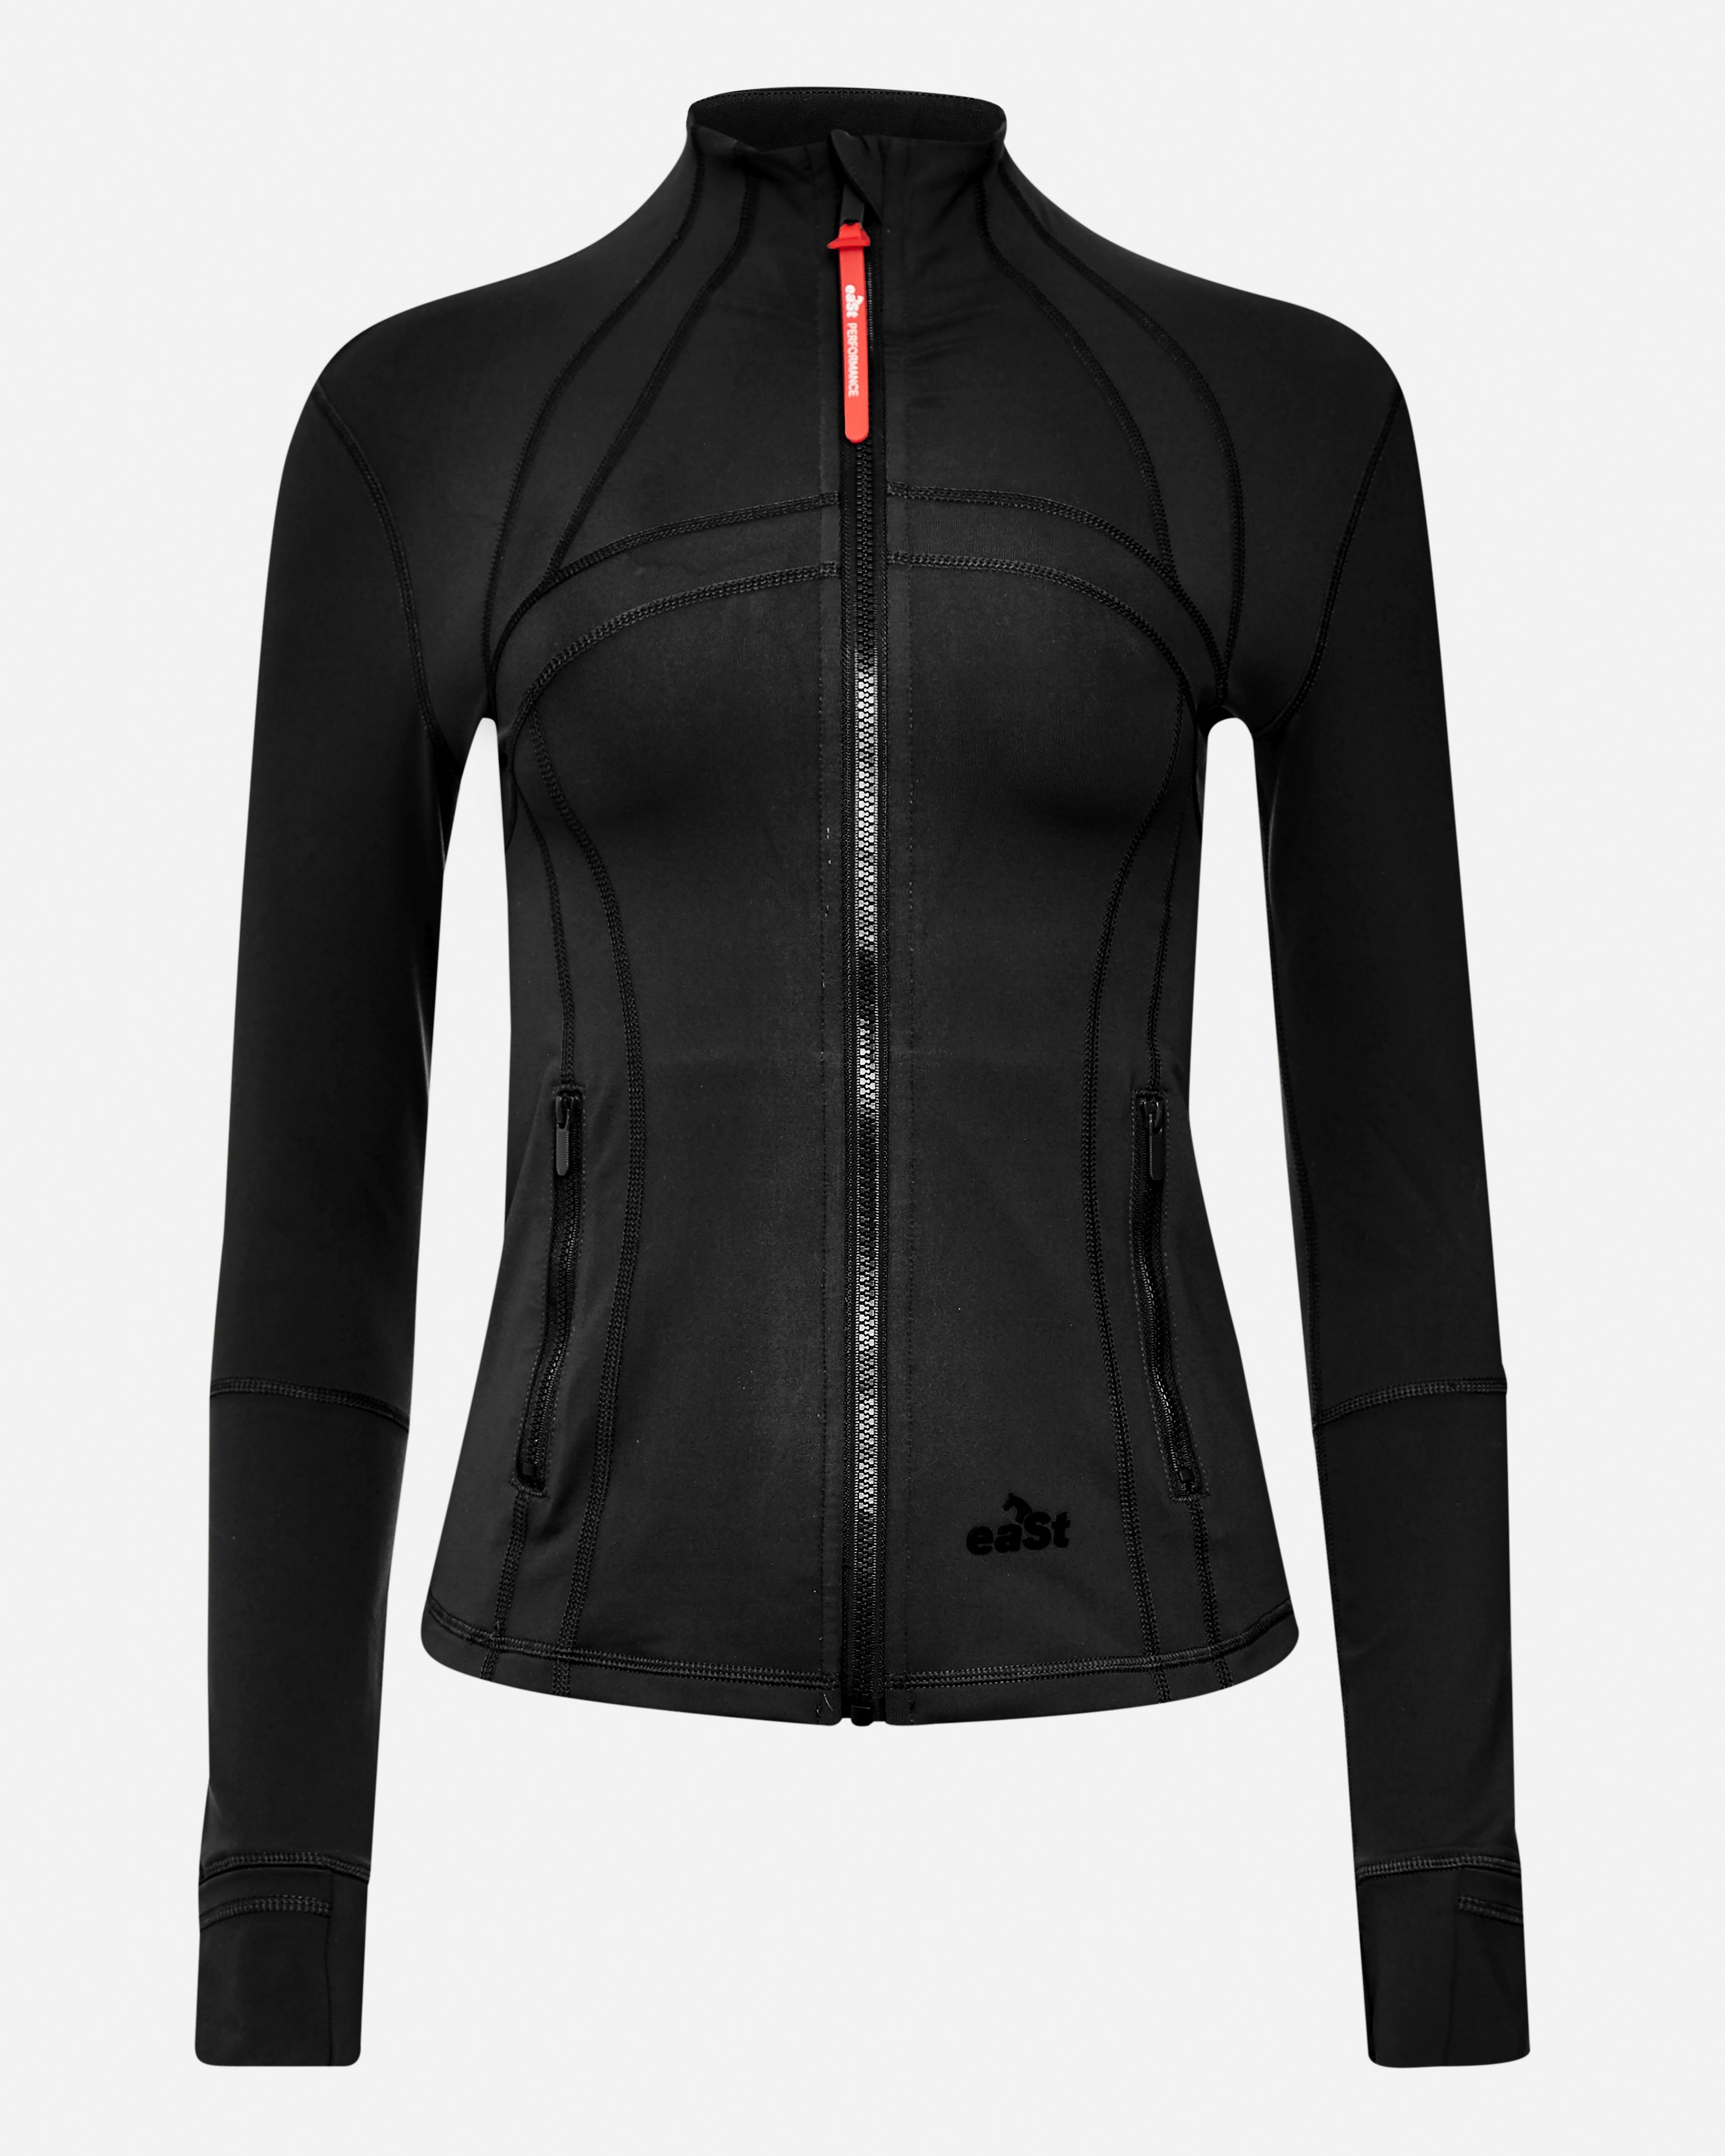 eaSt Jacket light Jersey | Black | L